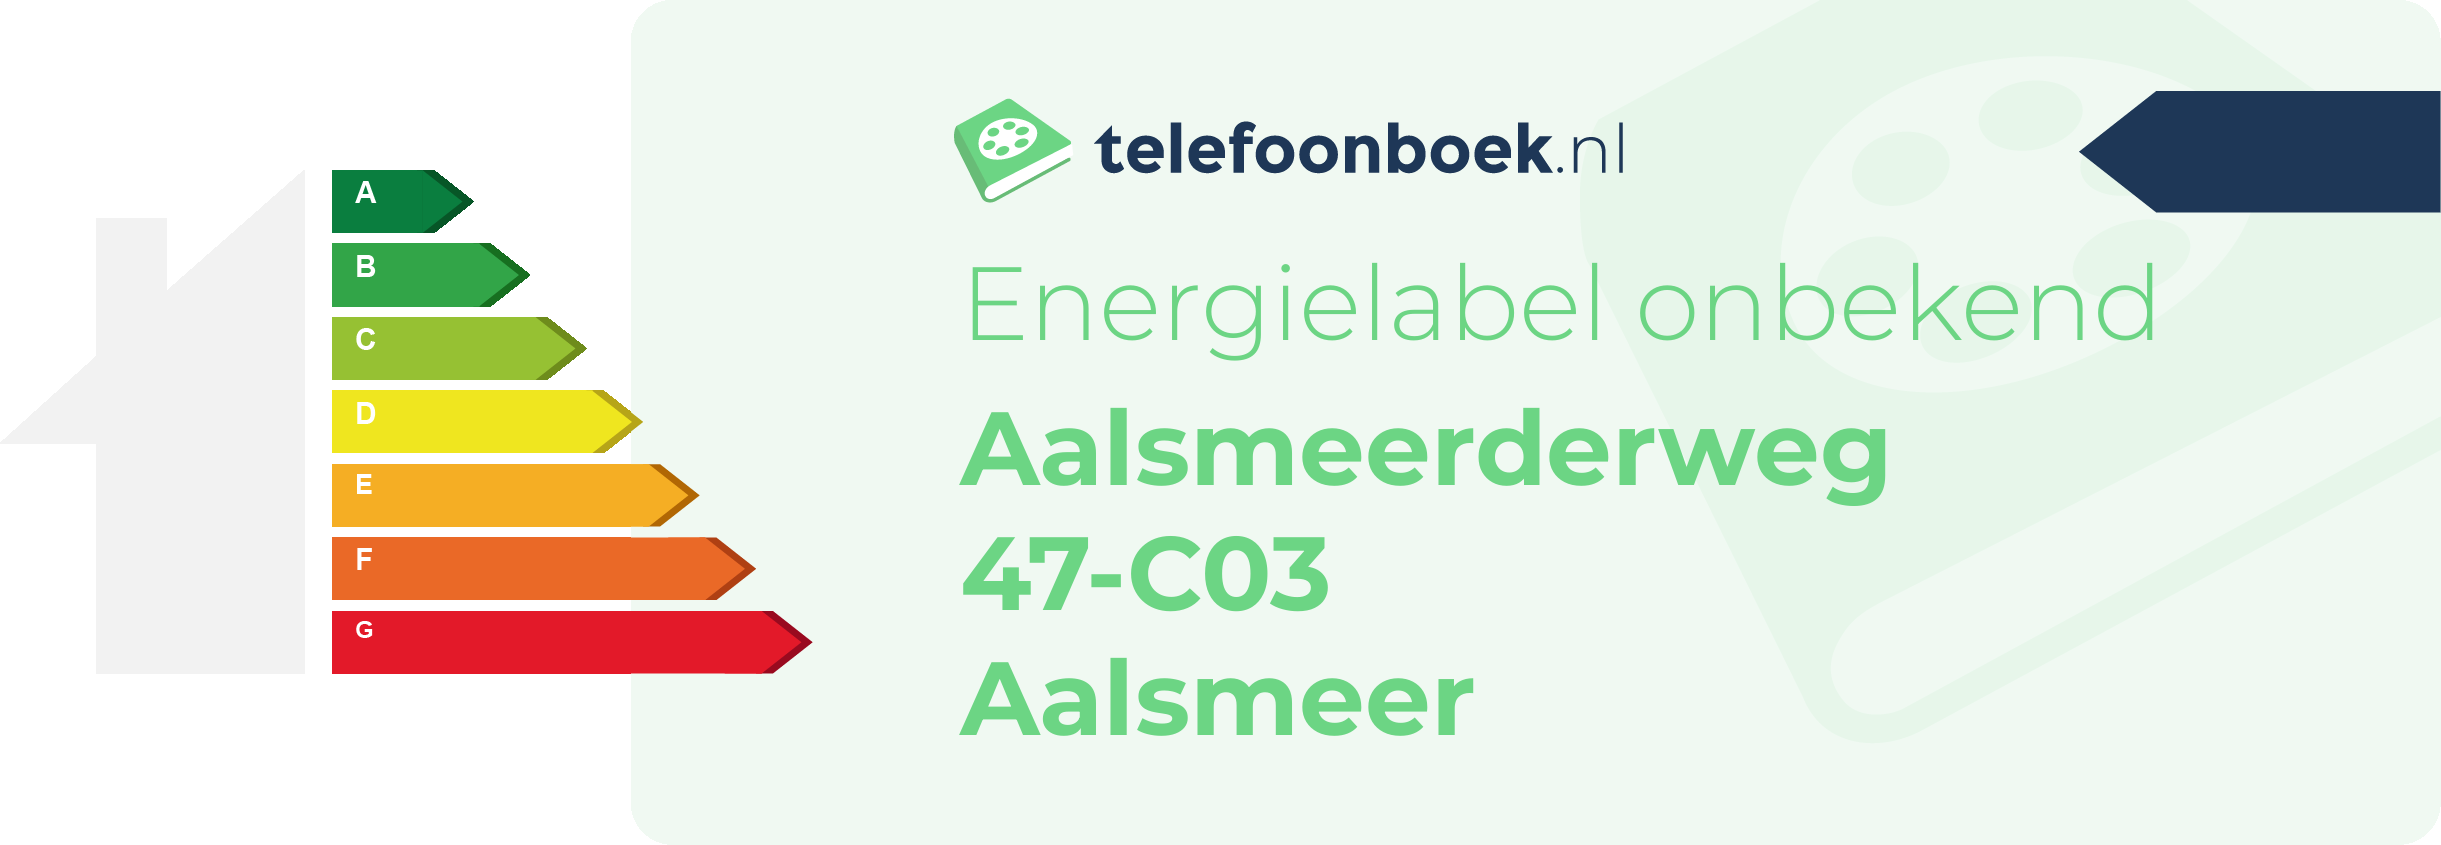 Energielabel Aalsmeerderweg 47-C03 Aalsmeer